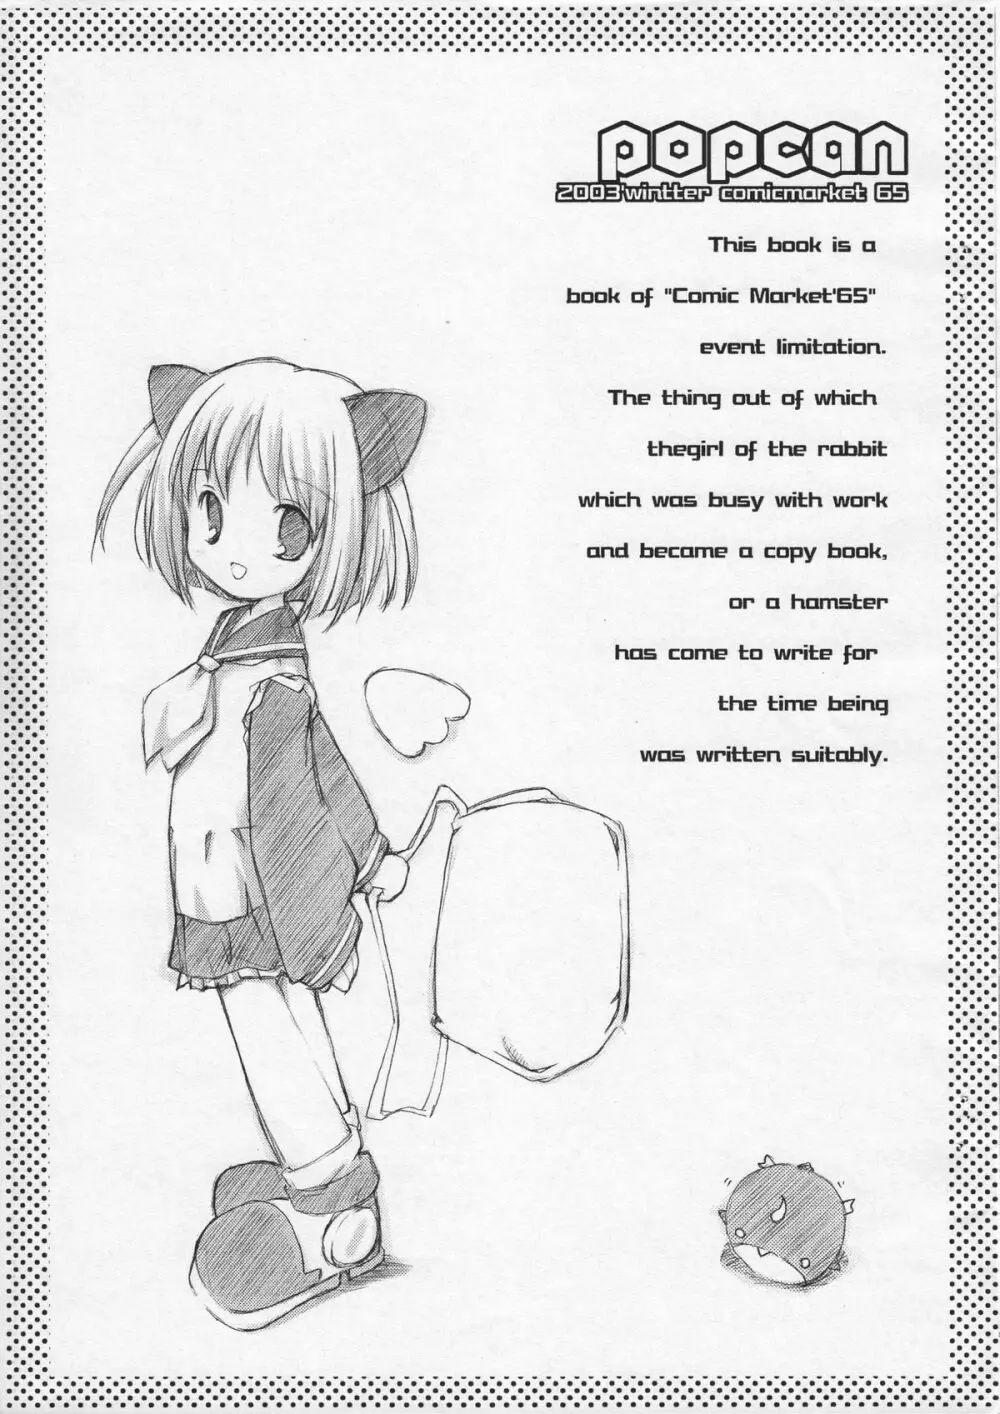 popcan 2003 winter comicmarket 65 18ページ